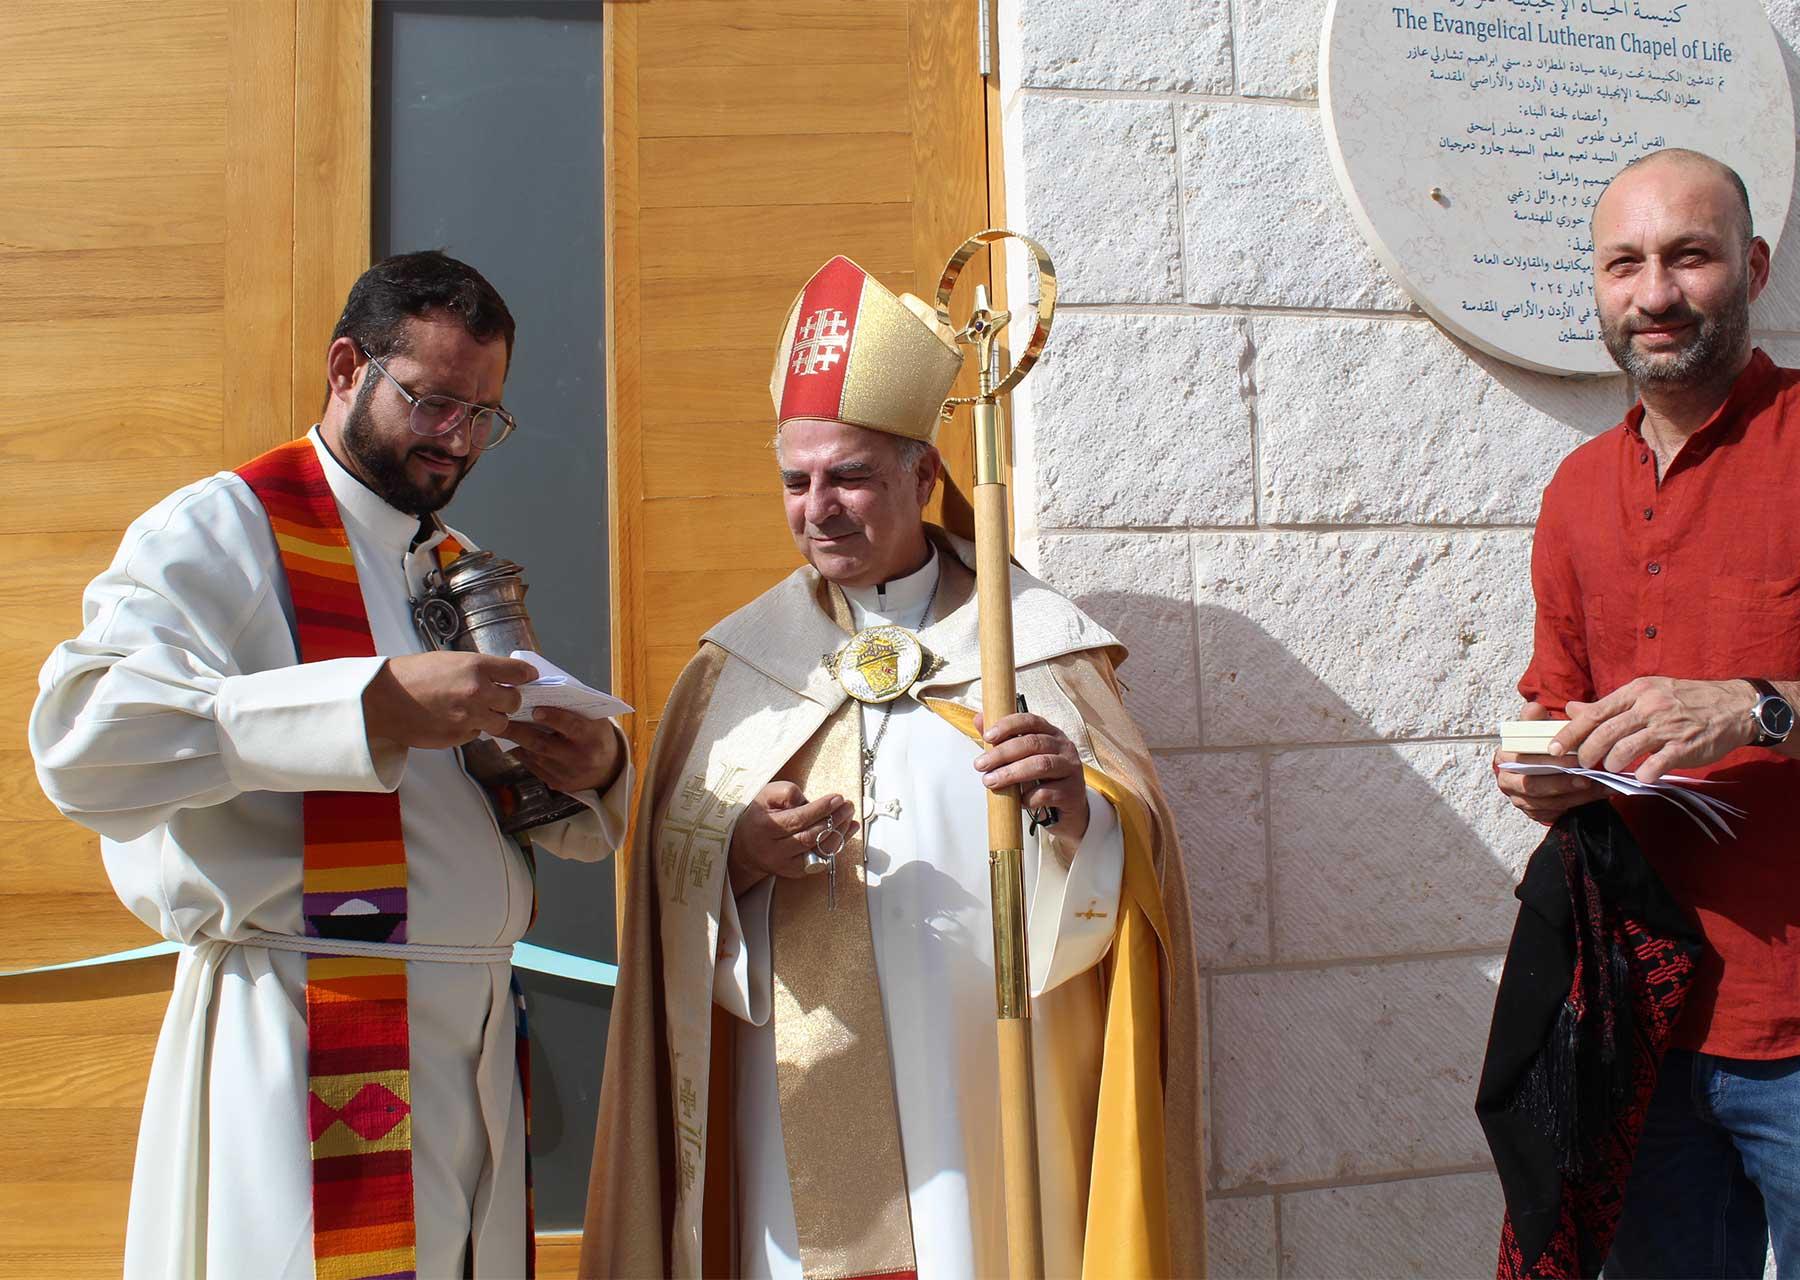 ELCJHL Bishop Sani Azar during the inauguration of the “Chapel of Life". Photo: Maddi Froiland/ELCJHL